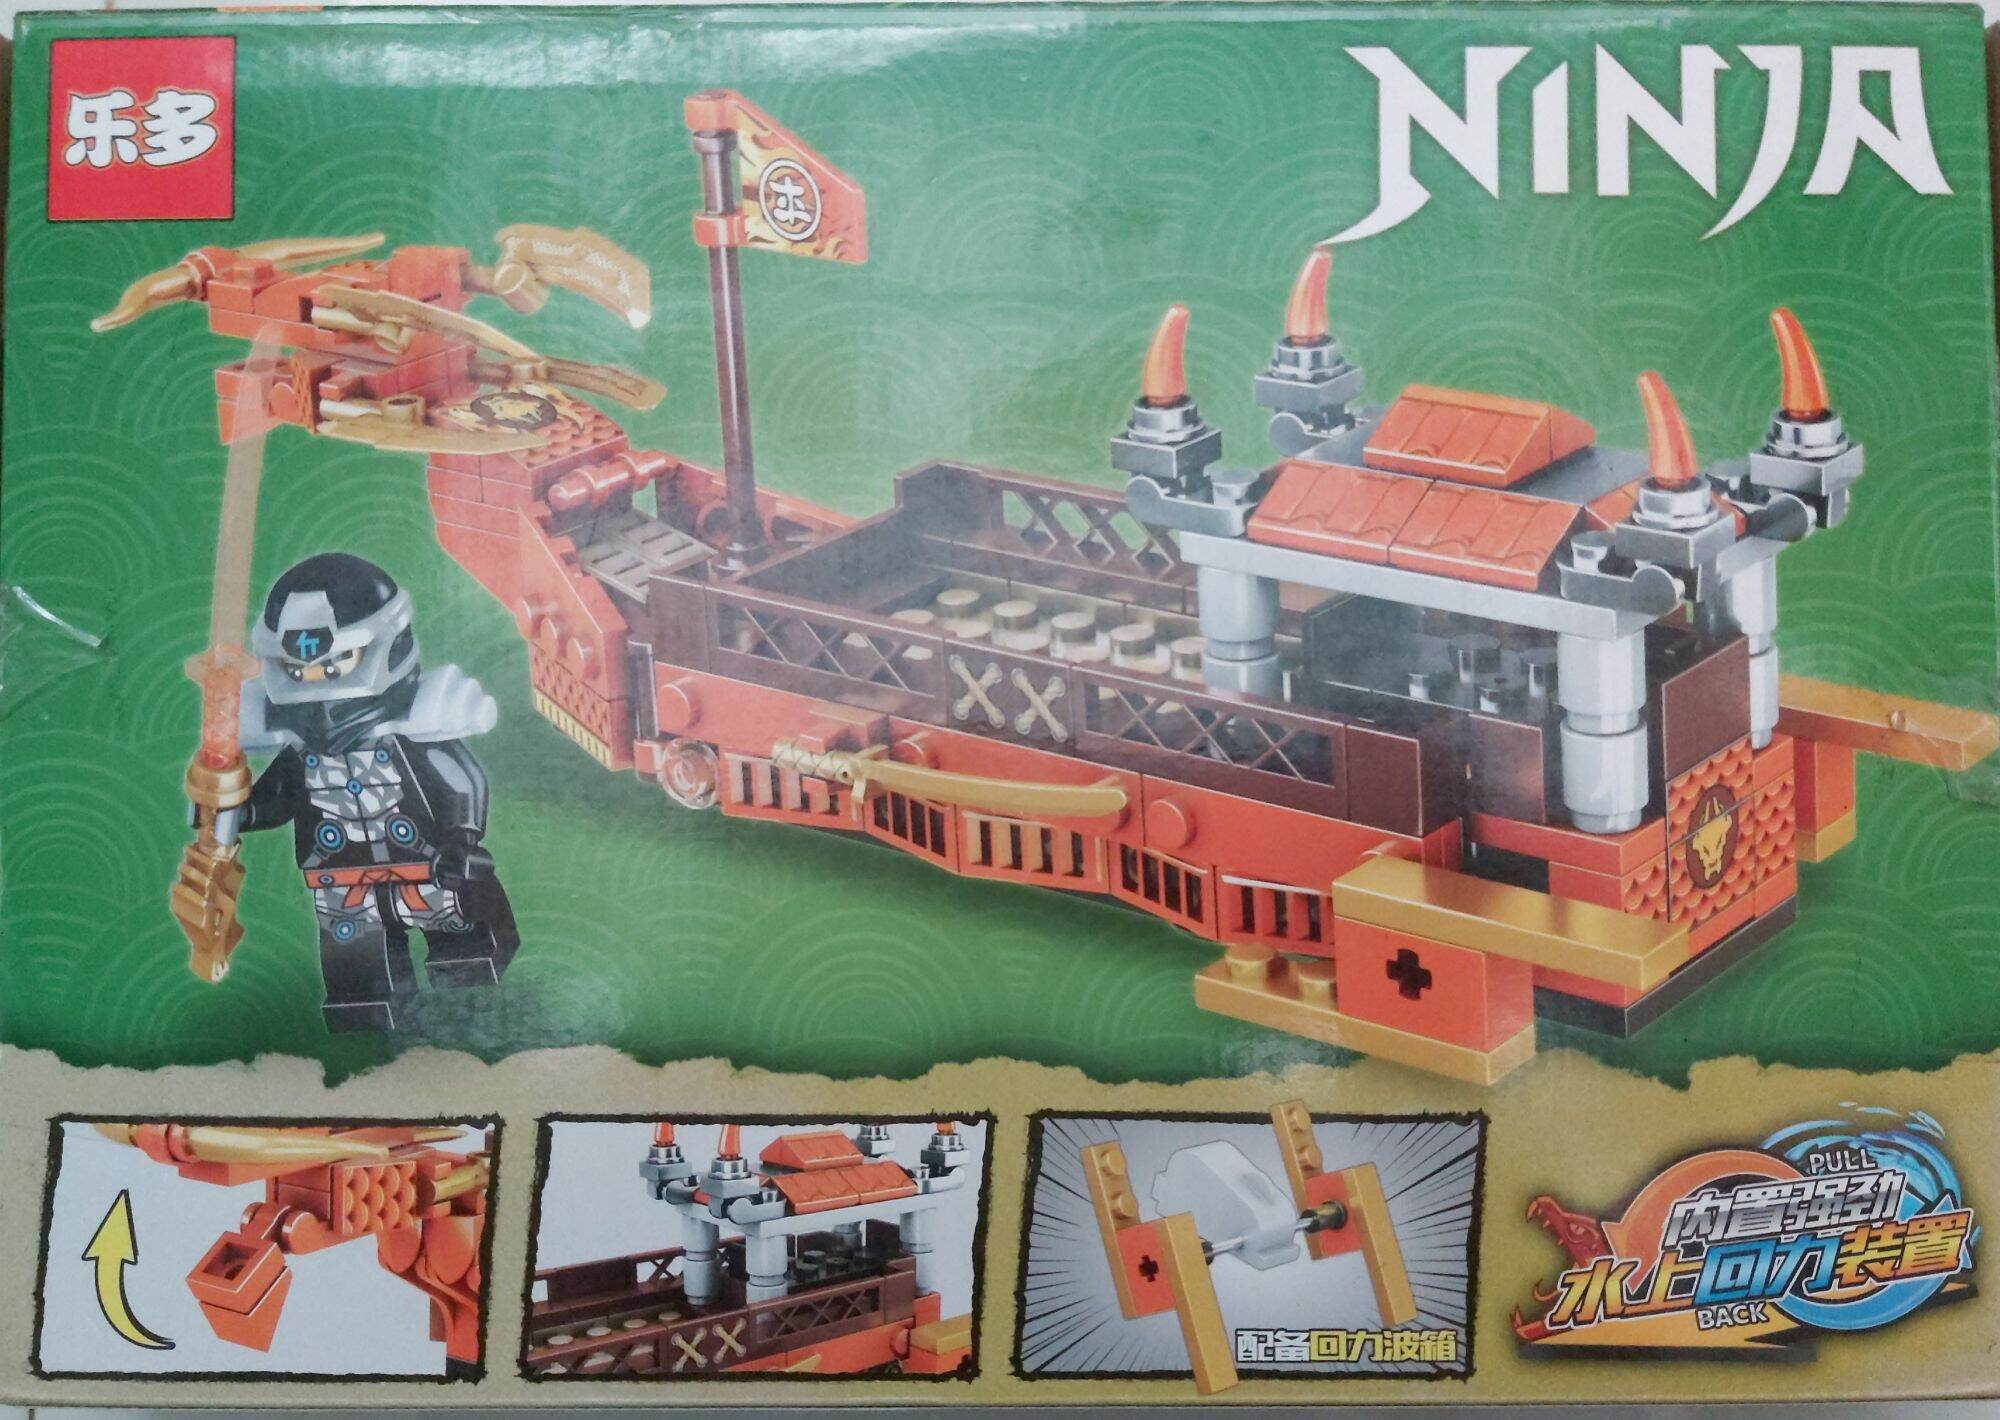 Lego Ninja Thuyền rồng loại nhỏ